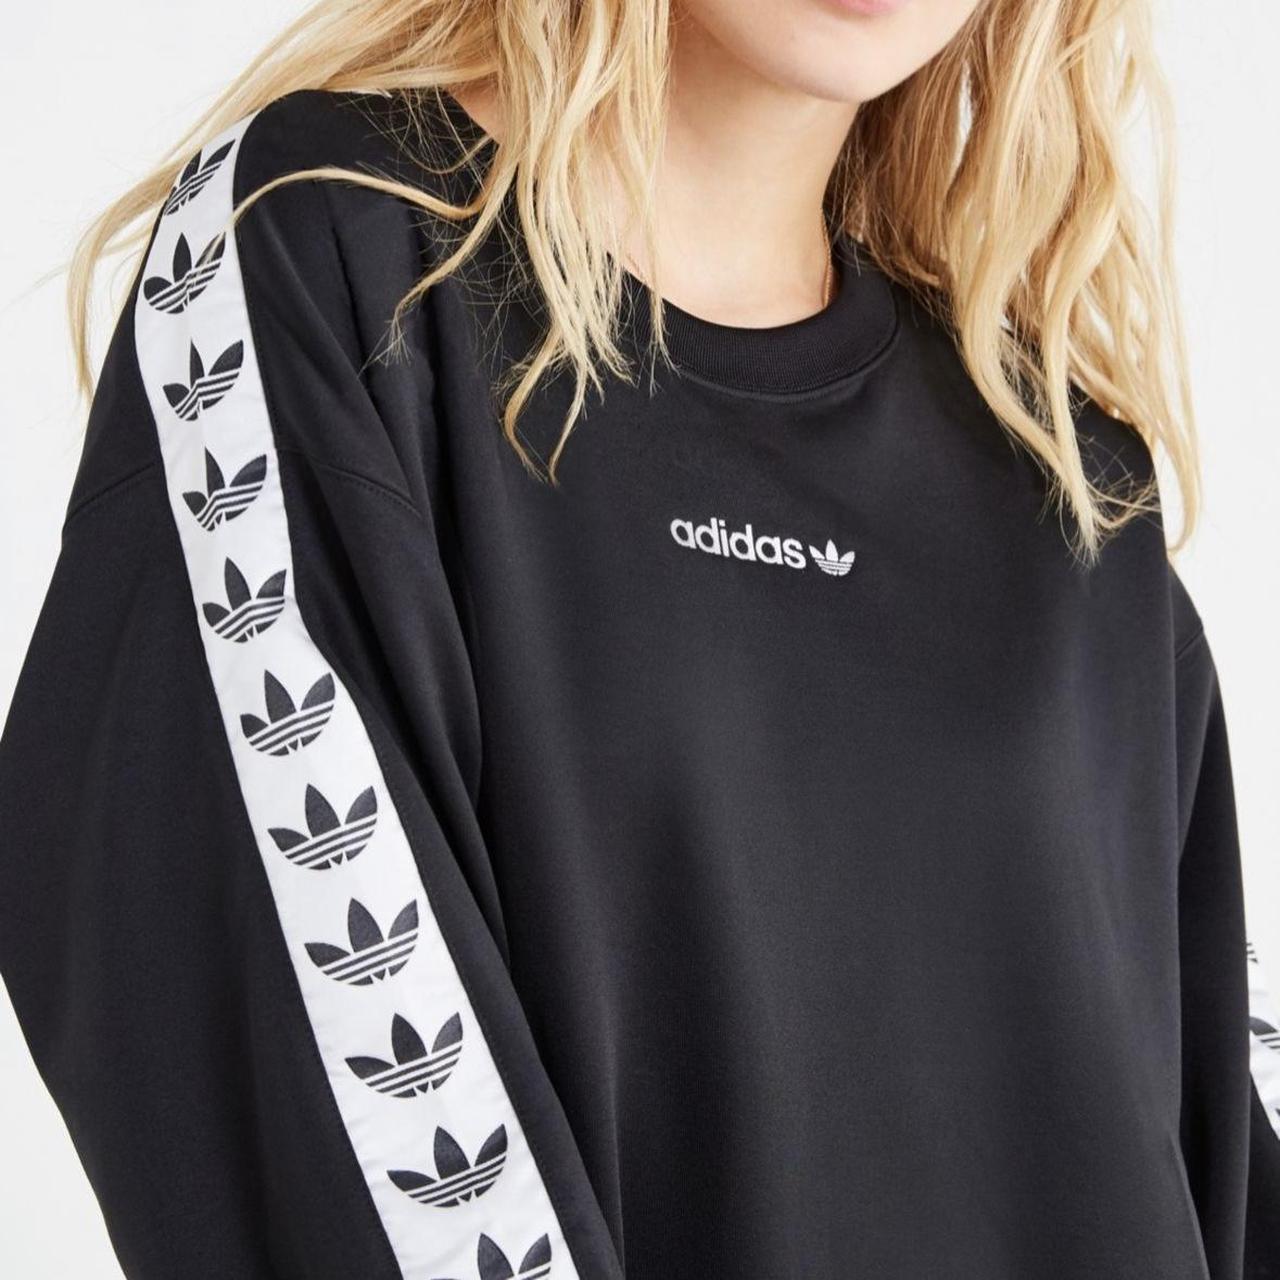 Adidas Originals Taped Crewneck Sweatshirt Size:... - Depop